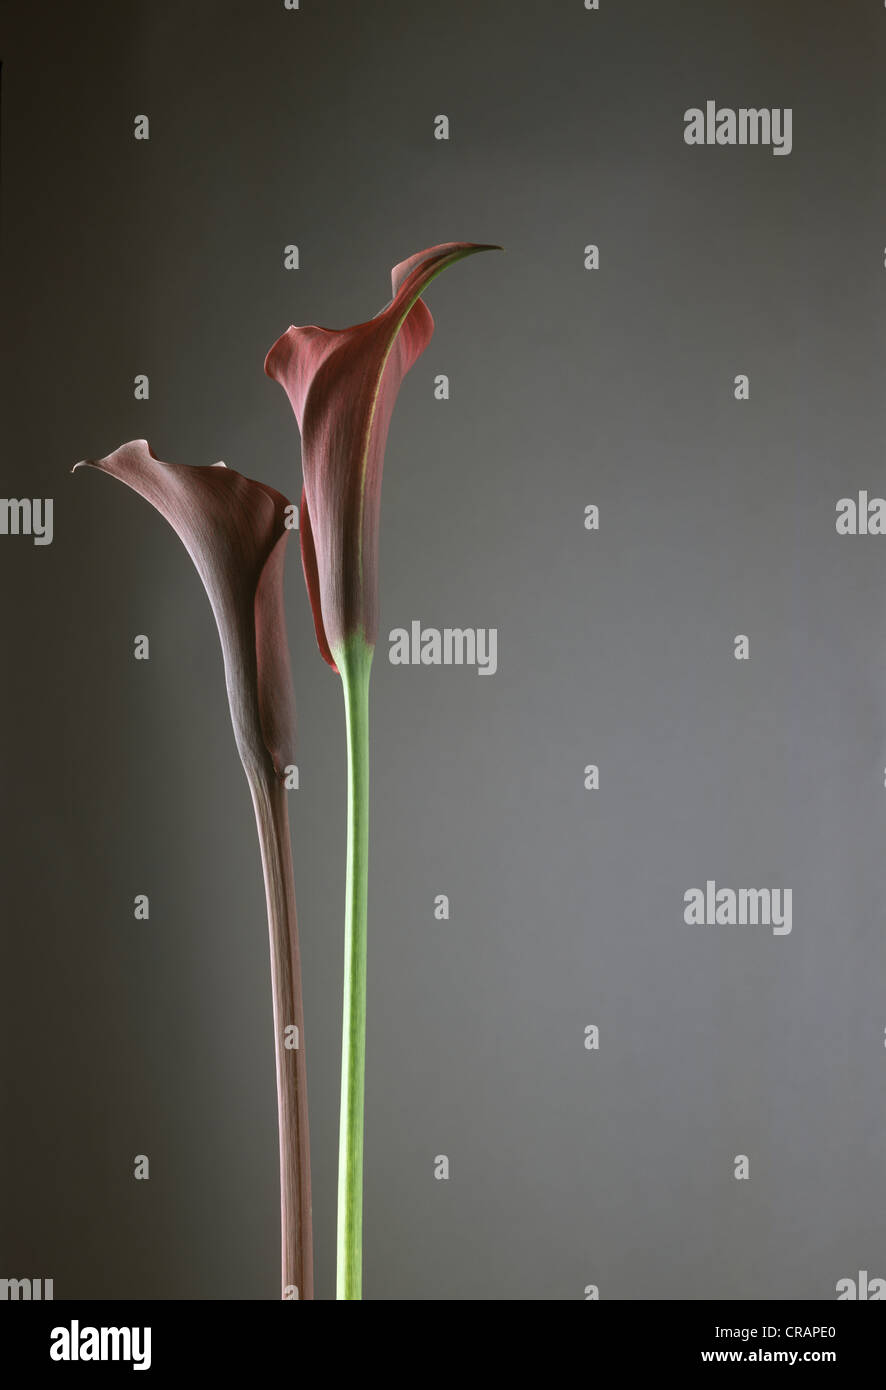 Arum lilies on neutral grey background. Stock Photo